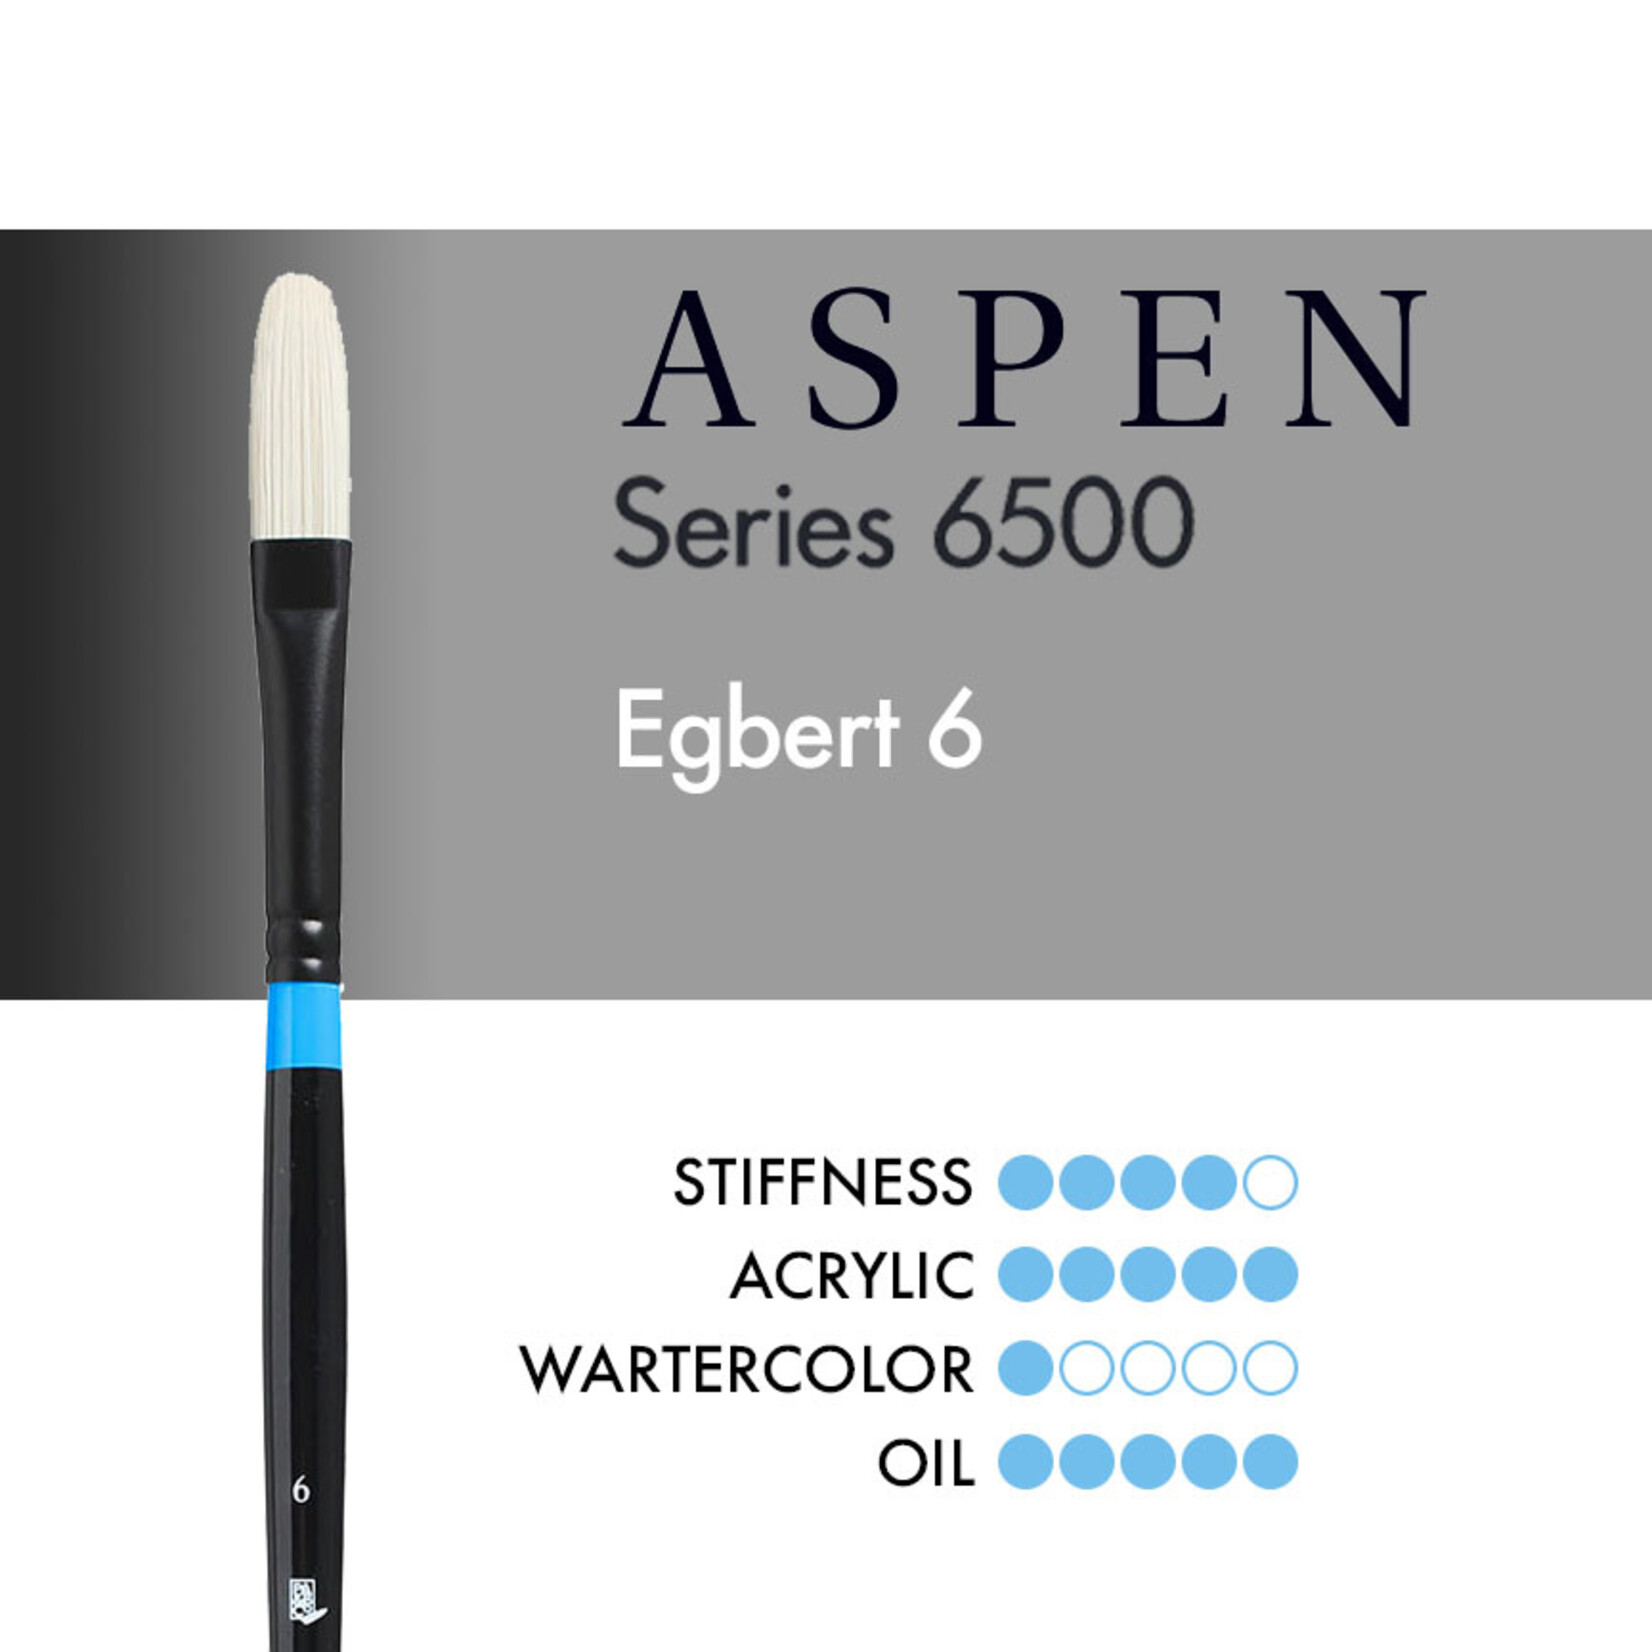 Princeton Aspen Egbert 6